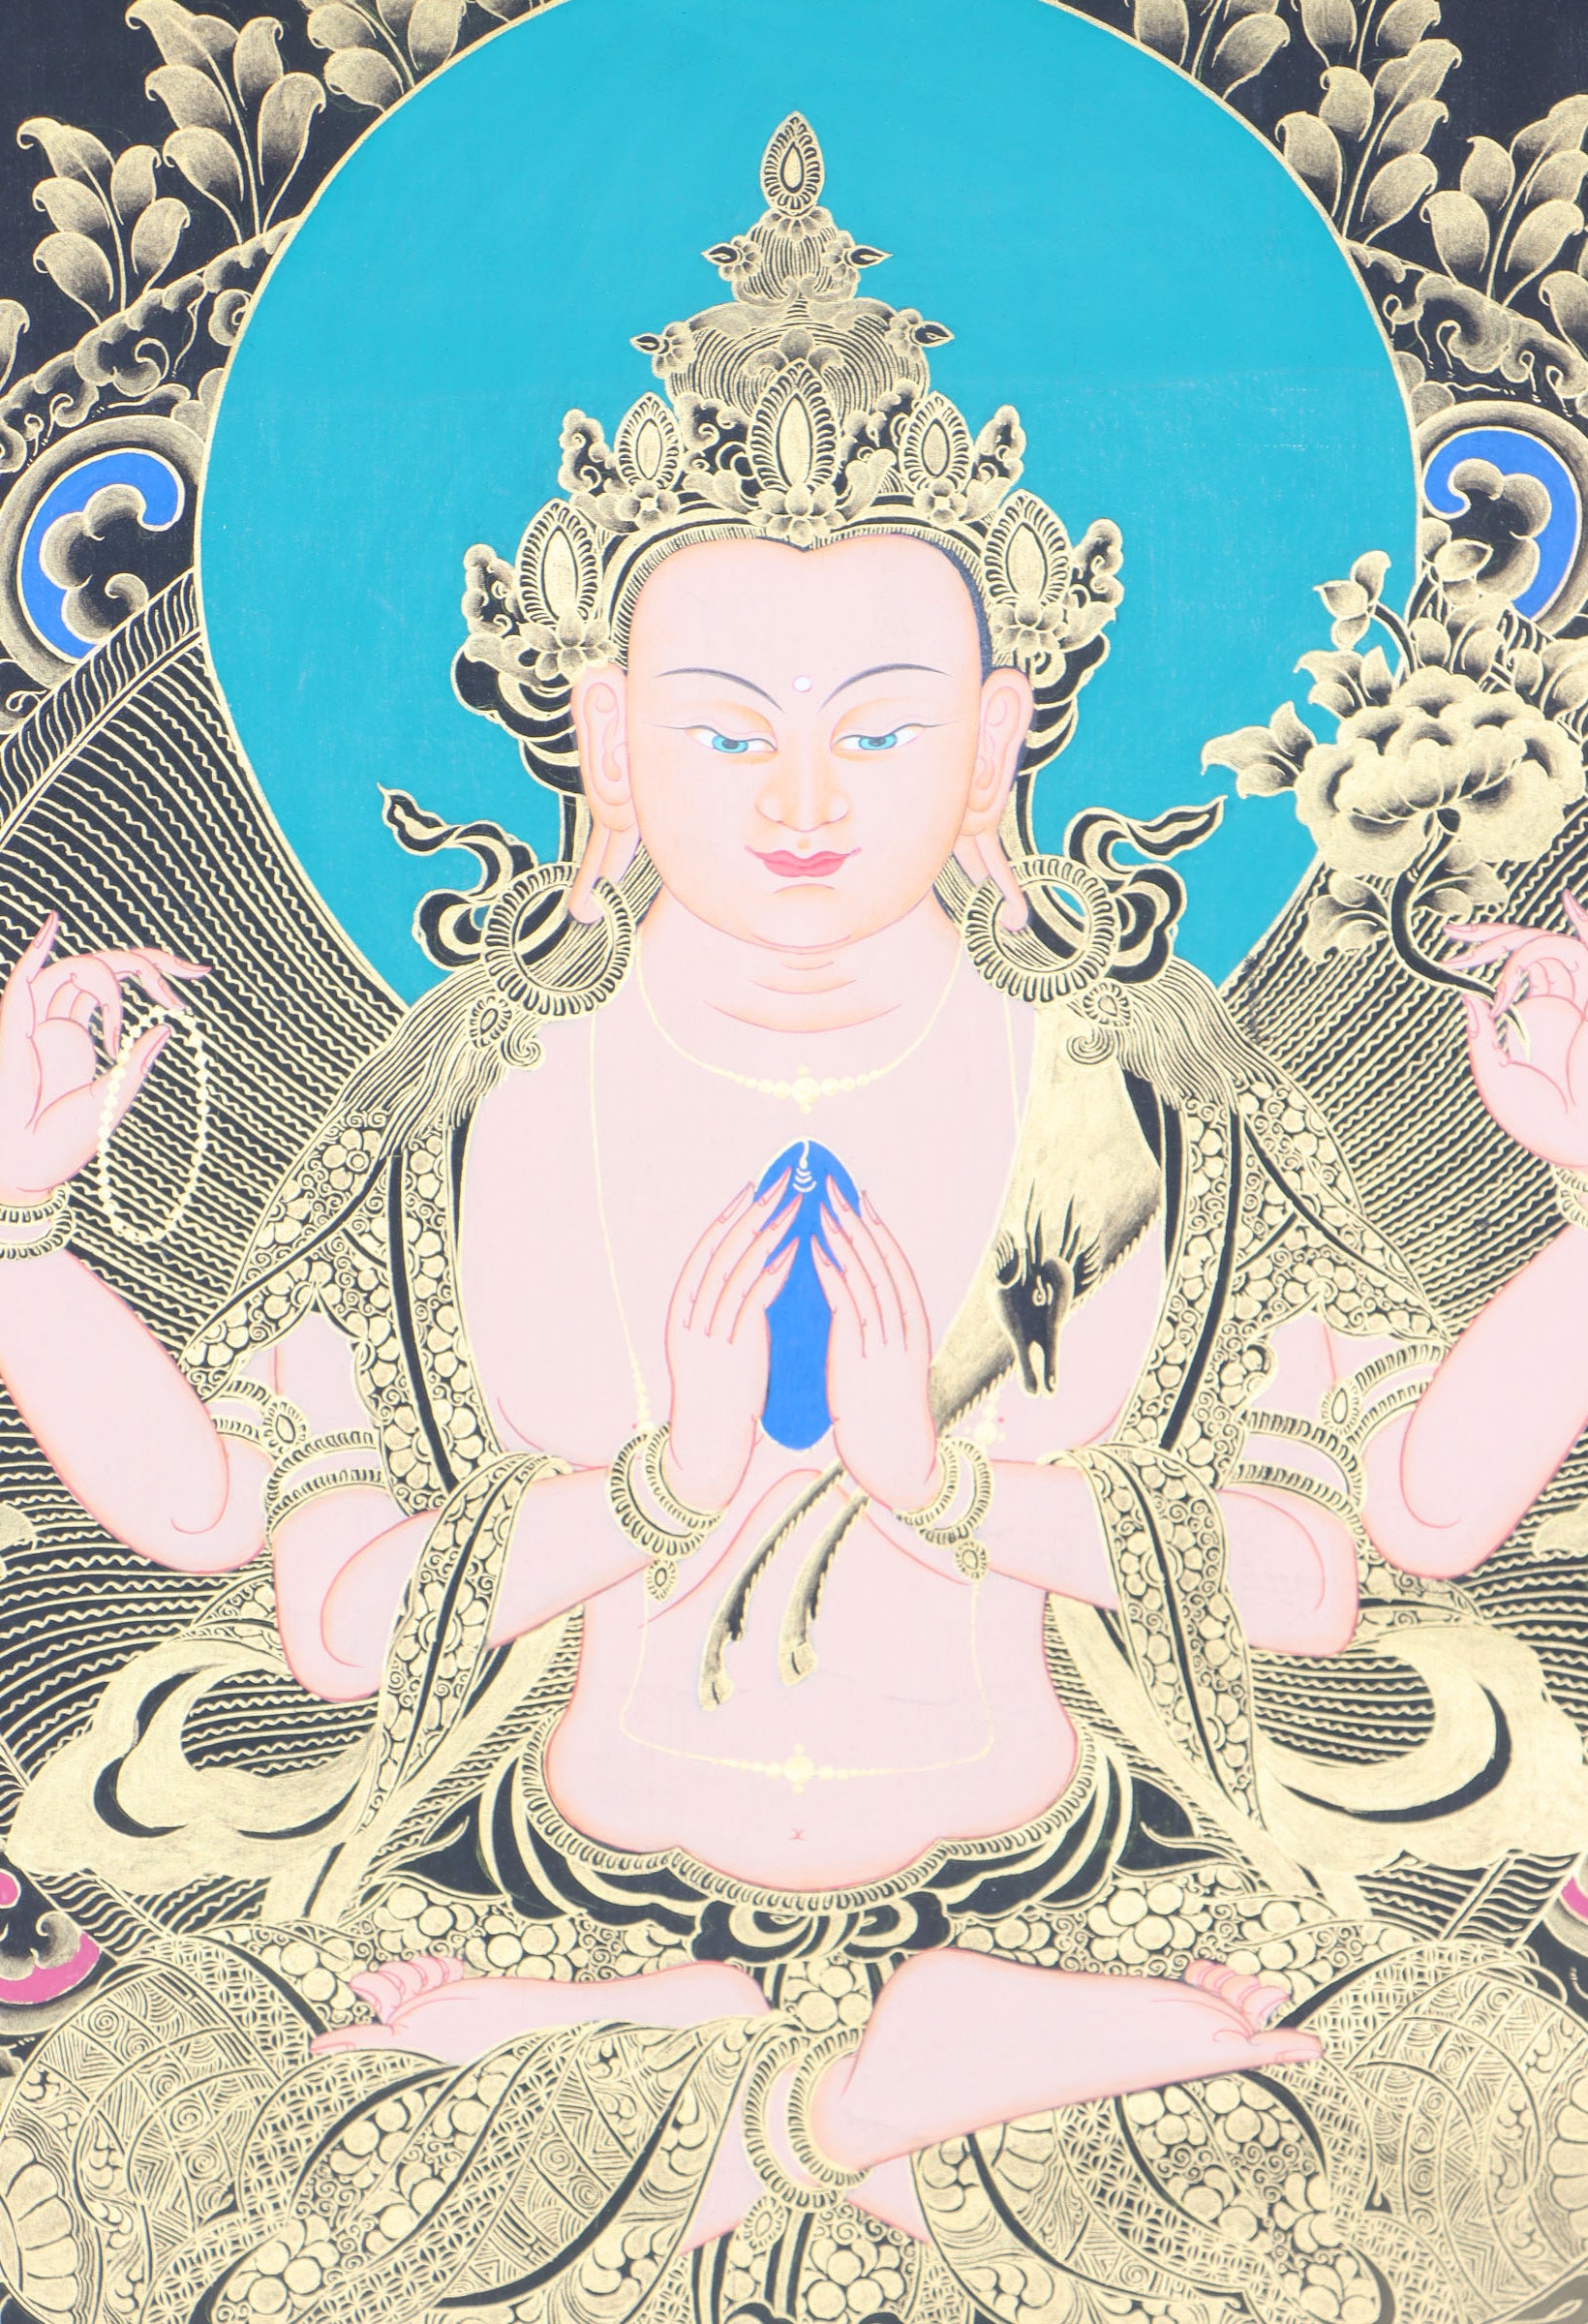 Chengresi Thangka Painting for meditation.